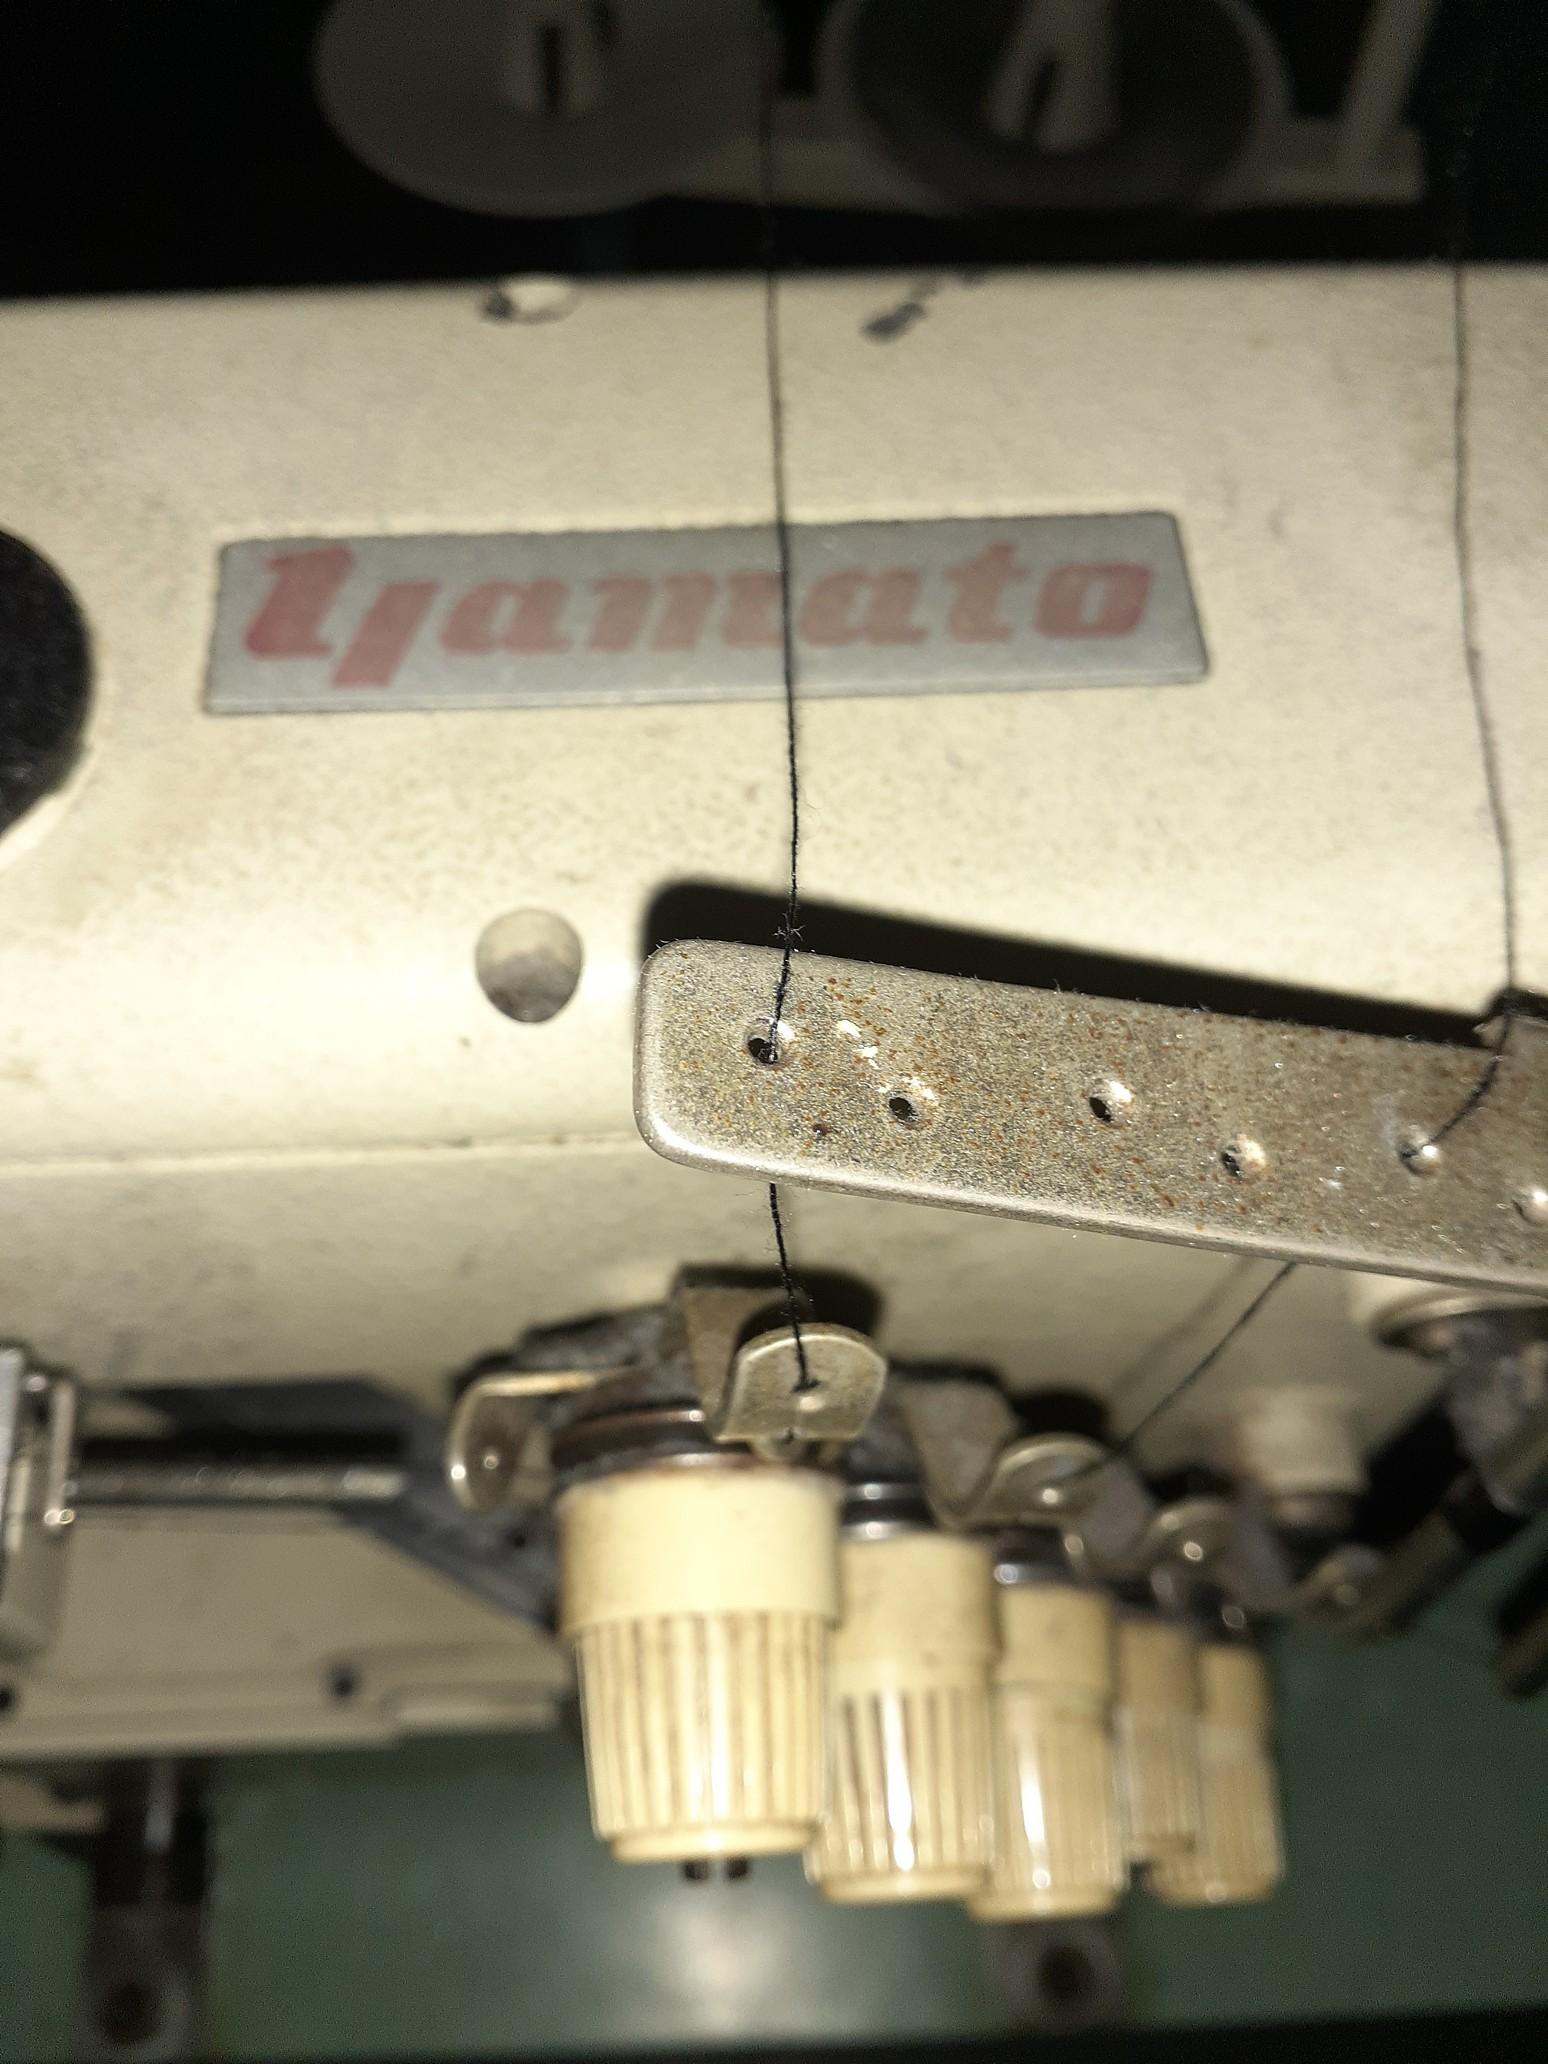 Yamato VC2700-156L CoverStitch Industrial Sewing machine